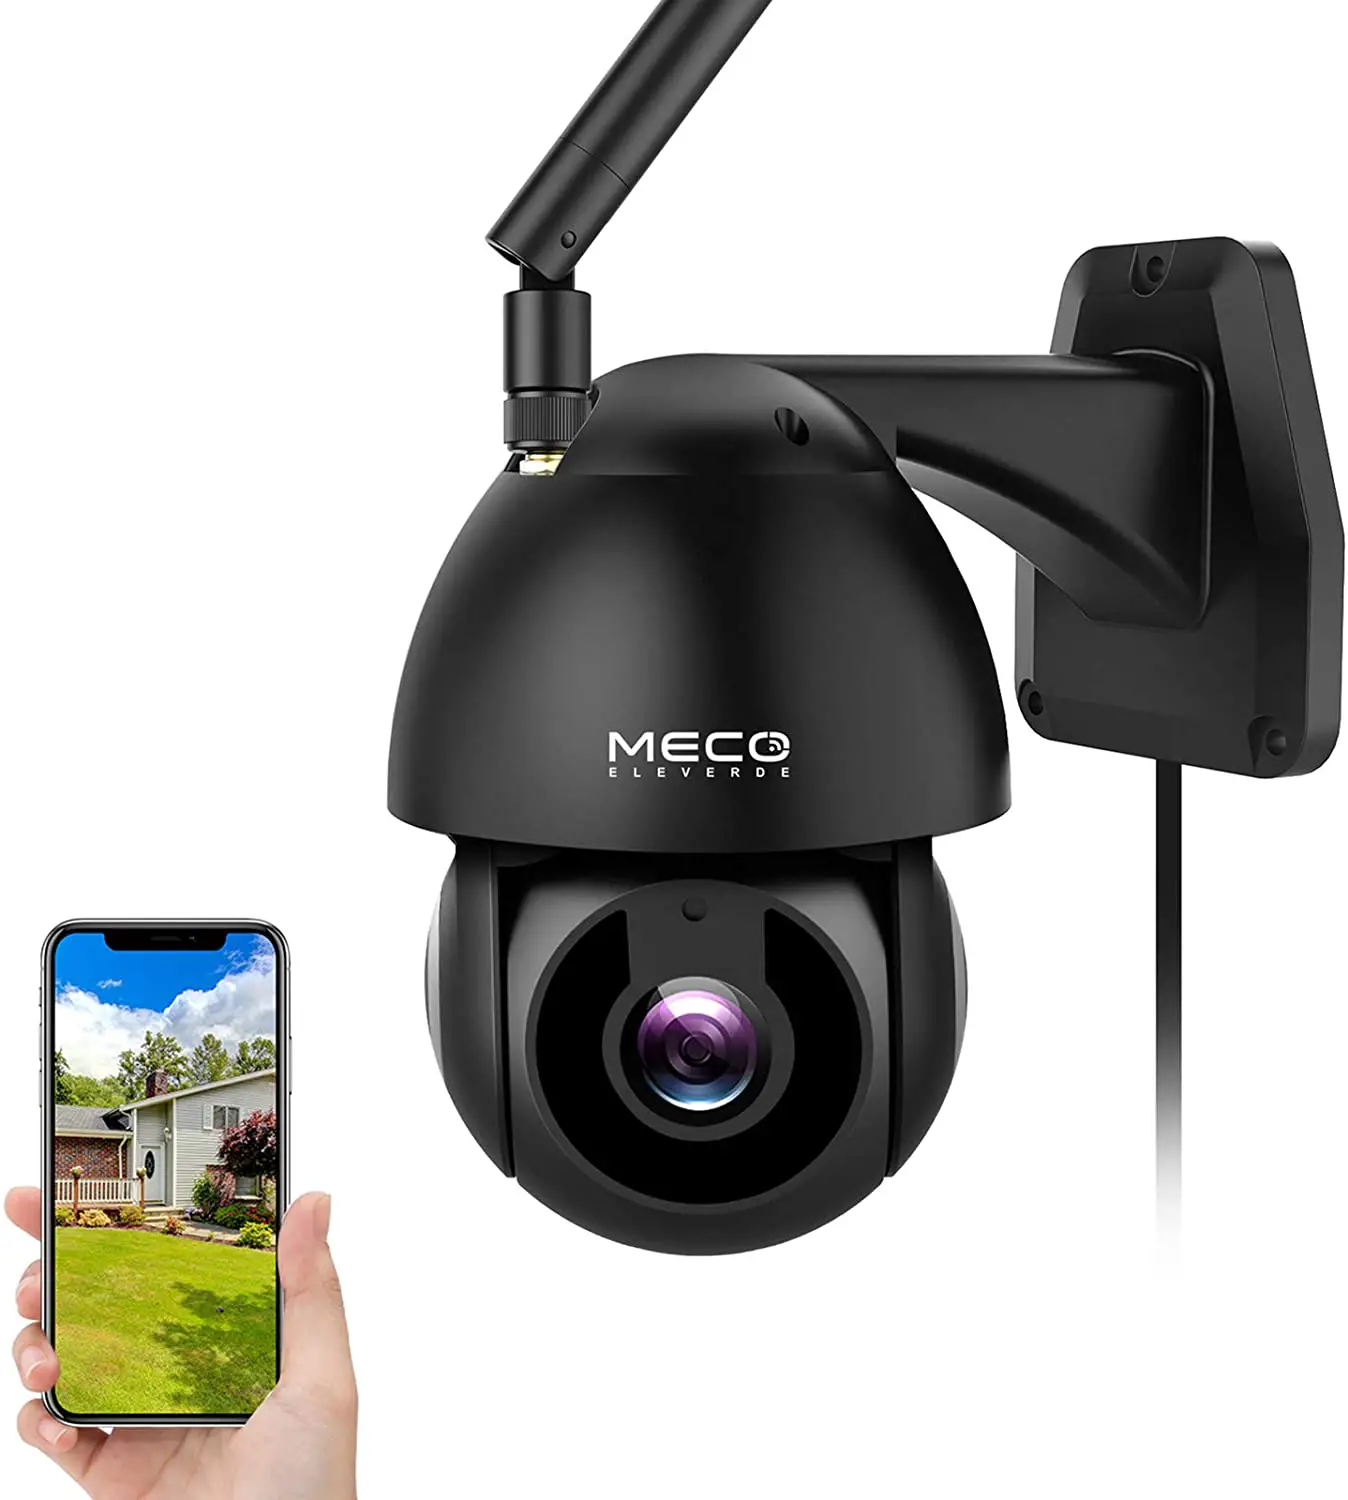 MECO 1080P HD PTZ WiFi Home Surveillance Camera